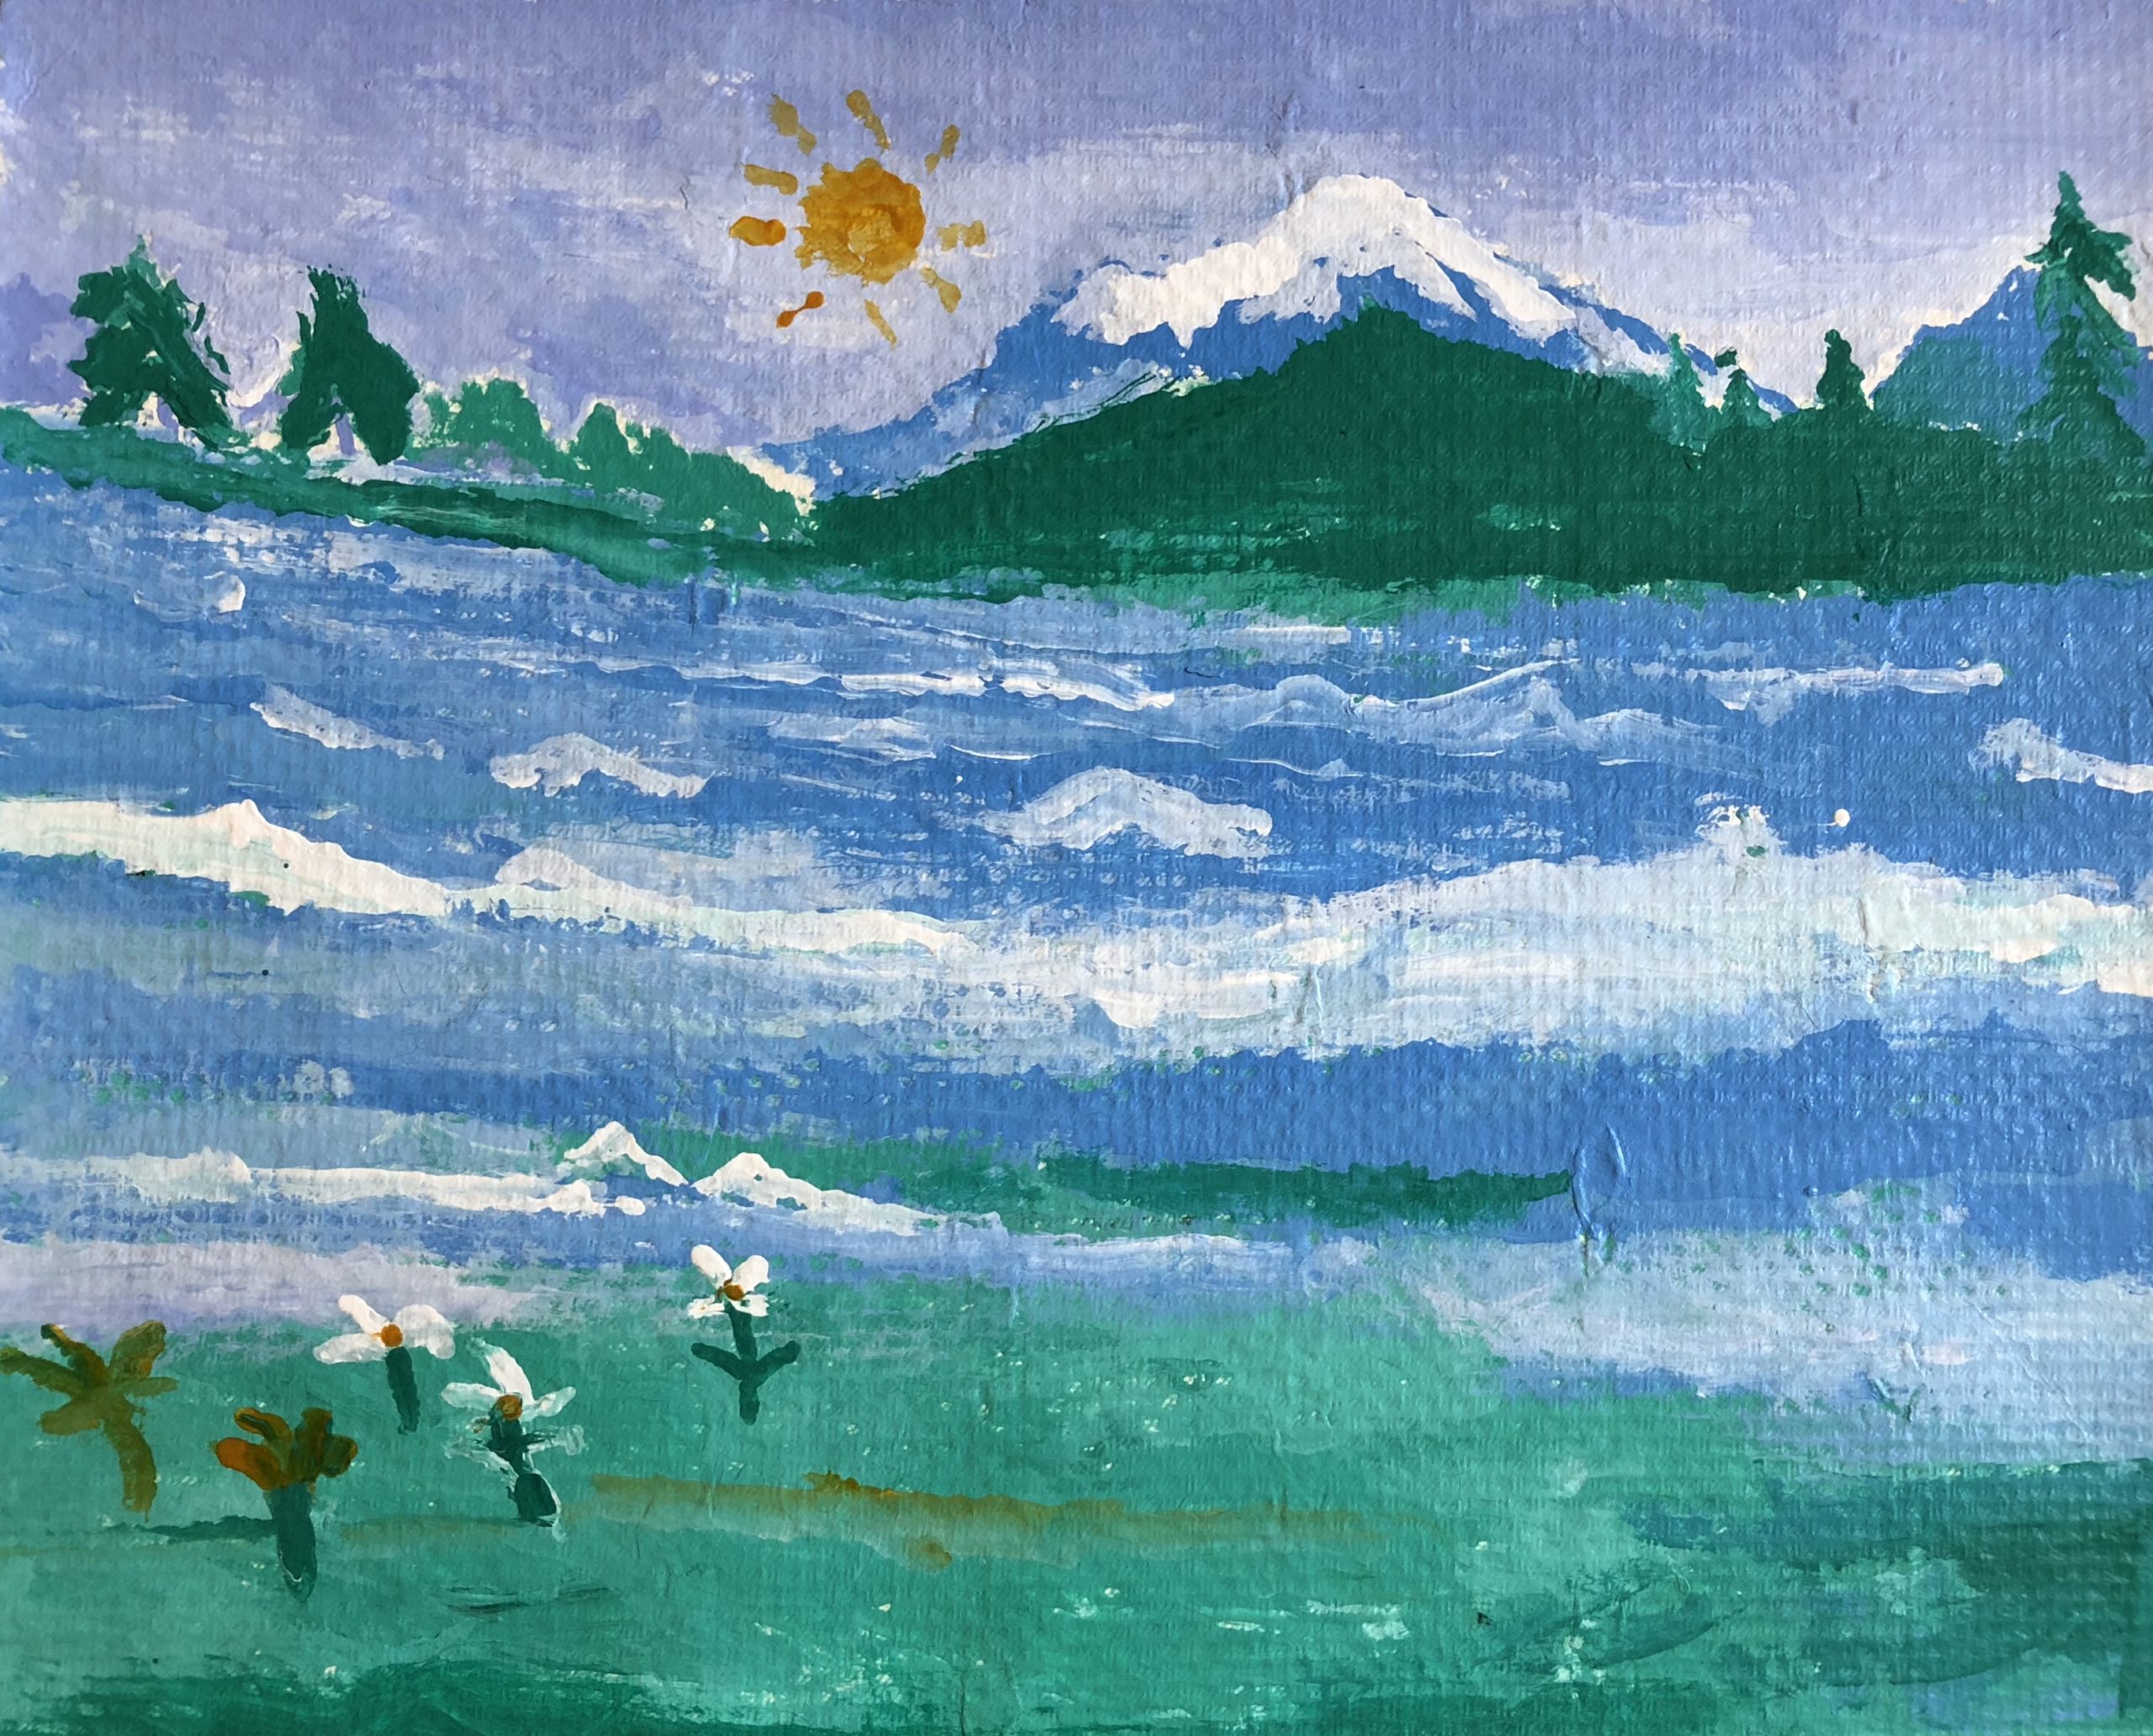 Mt Shasta - acrylic on pulp paper - 18 x 22